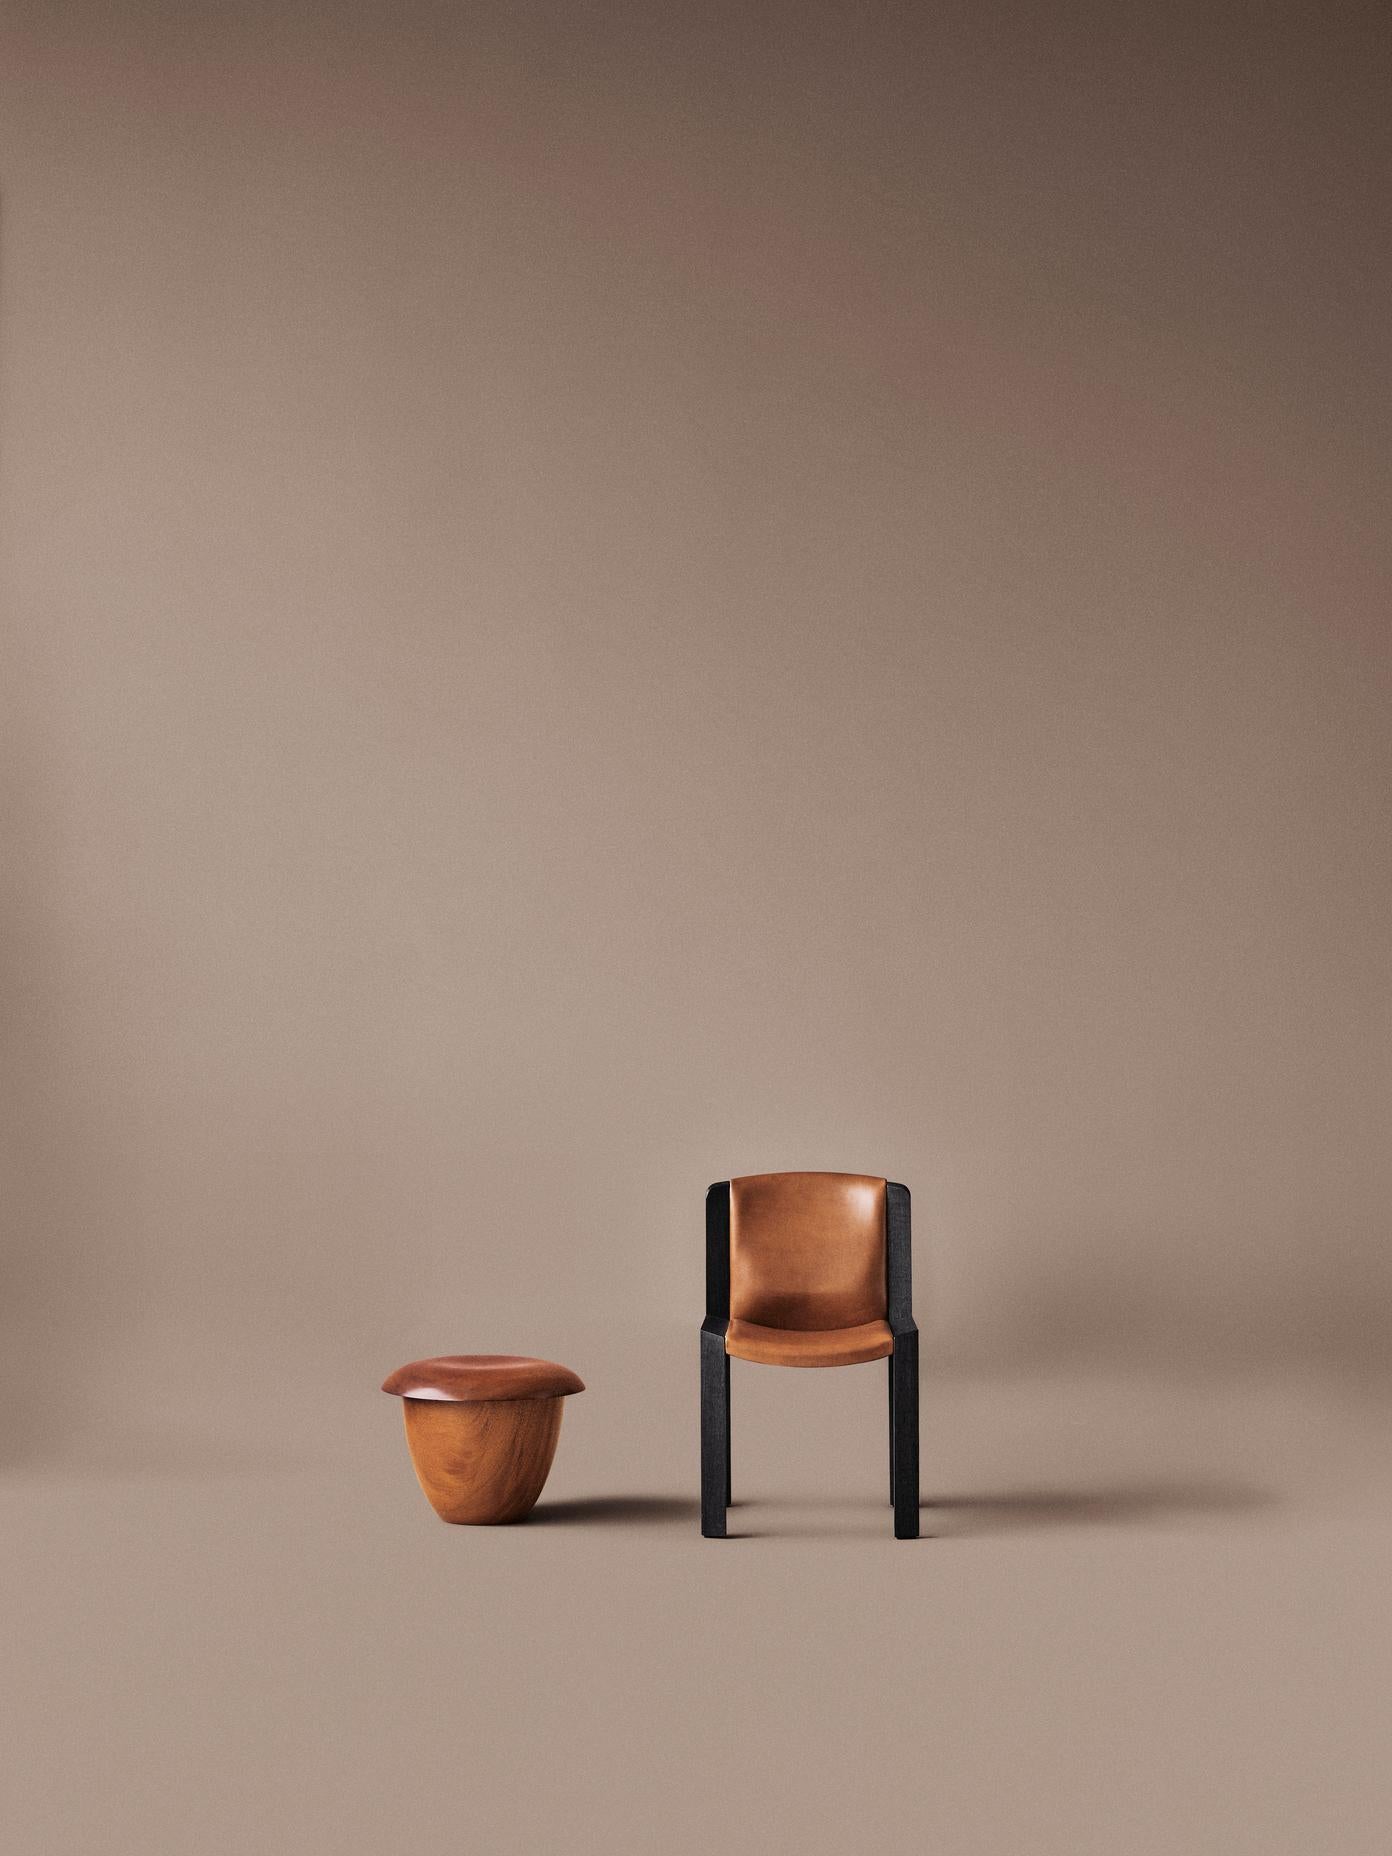 Set of Six Joe Colombo 'Chair 300' Wood and Sørensen Leather by Karakter 2